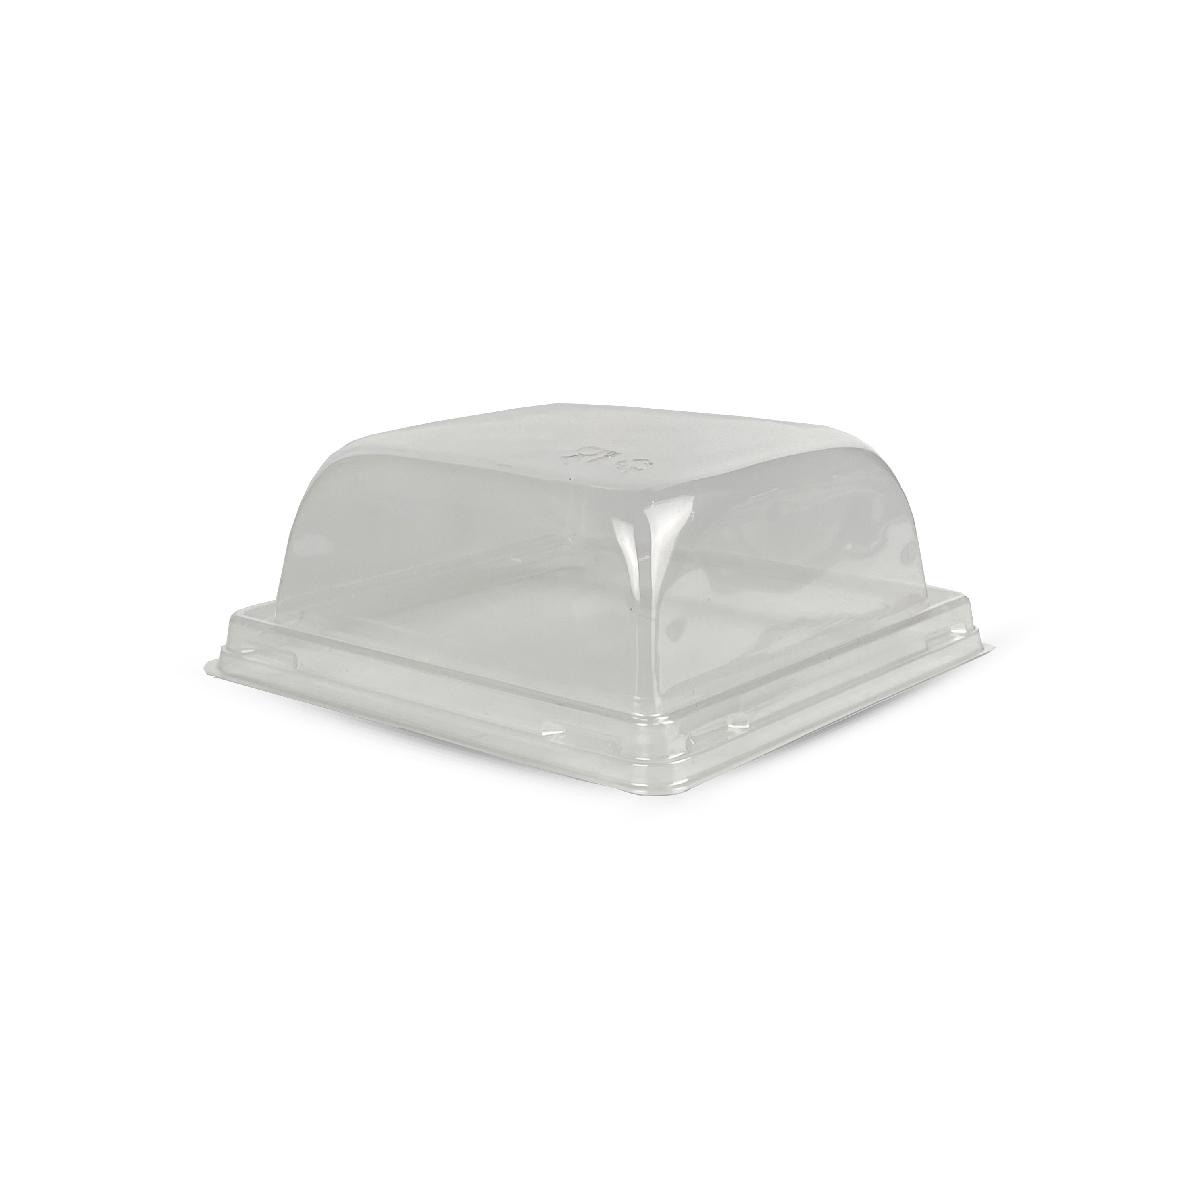 Крышка купольная для контейнера "Smart Pack 550" 56мм прозрачная OSQ (50/450)